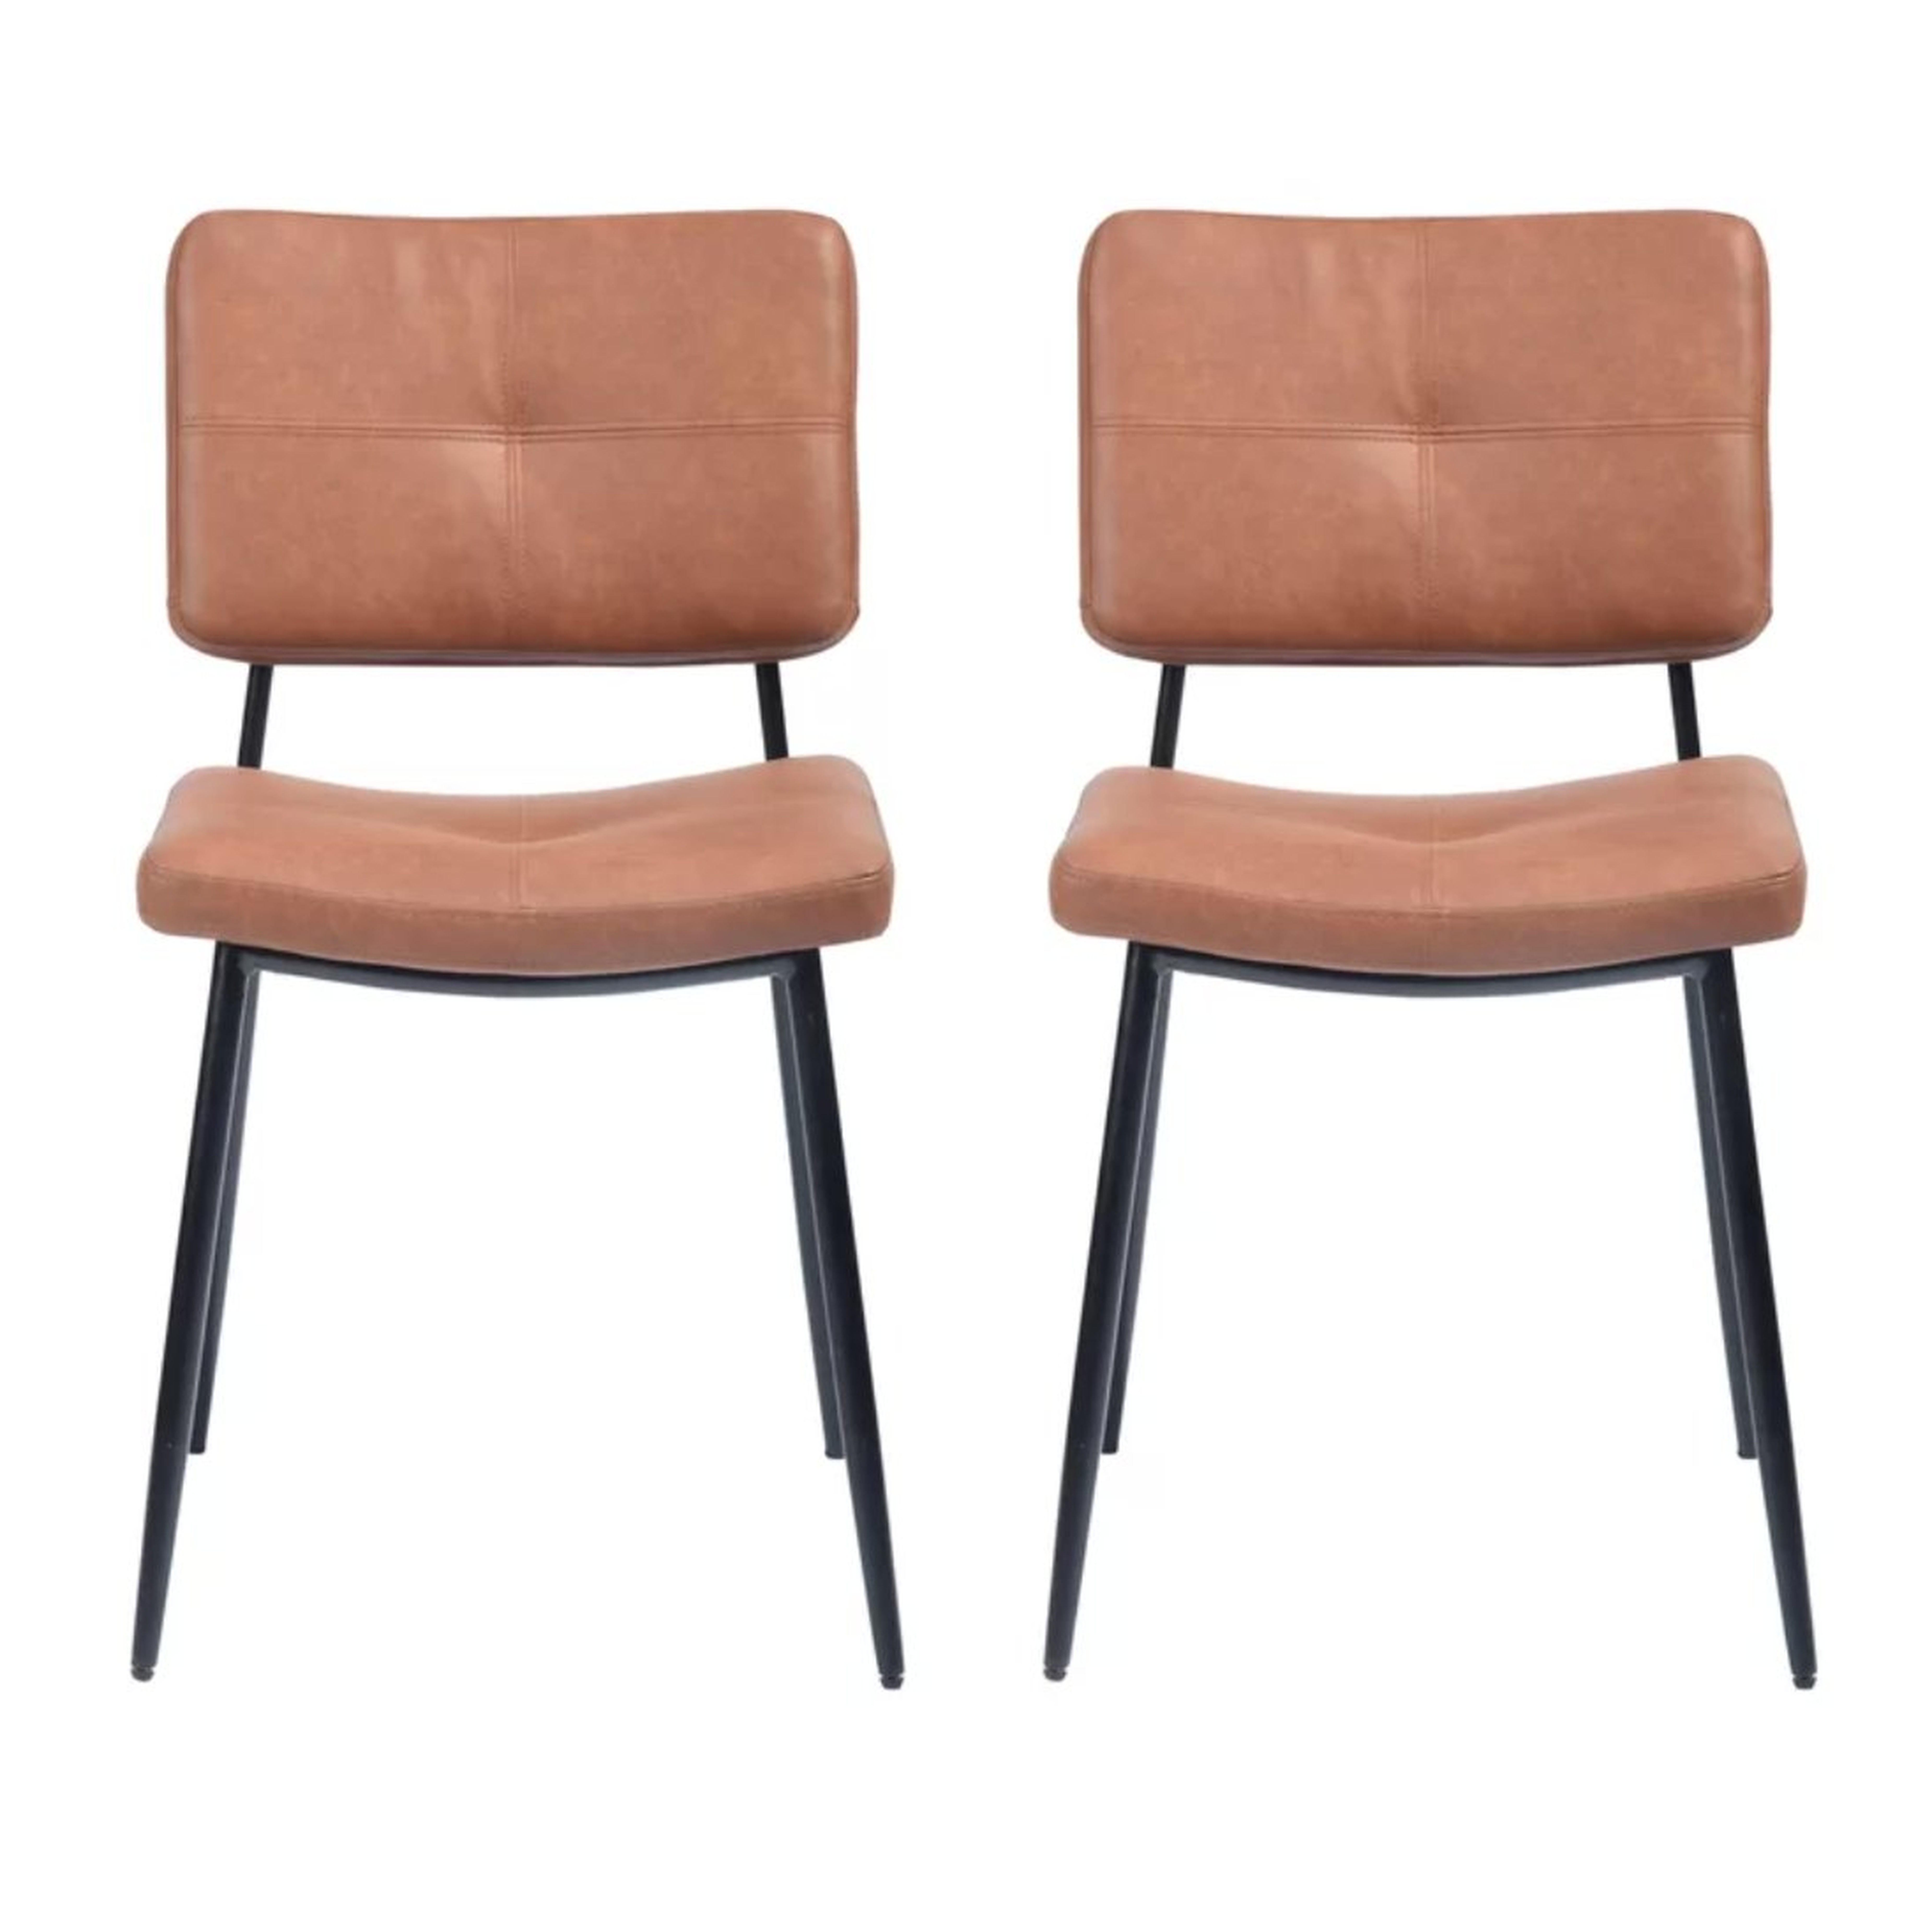 Dorland Upholstered Side Chair (Set of 2) - Wayfair